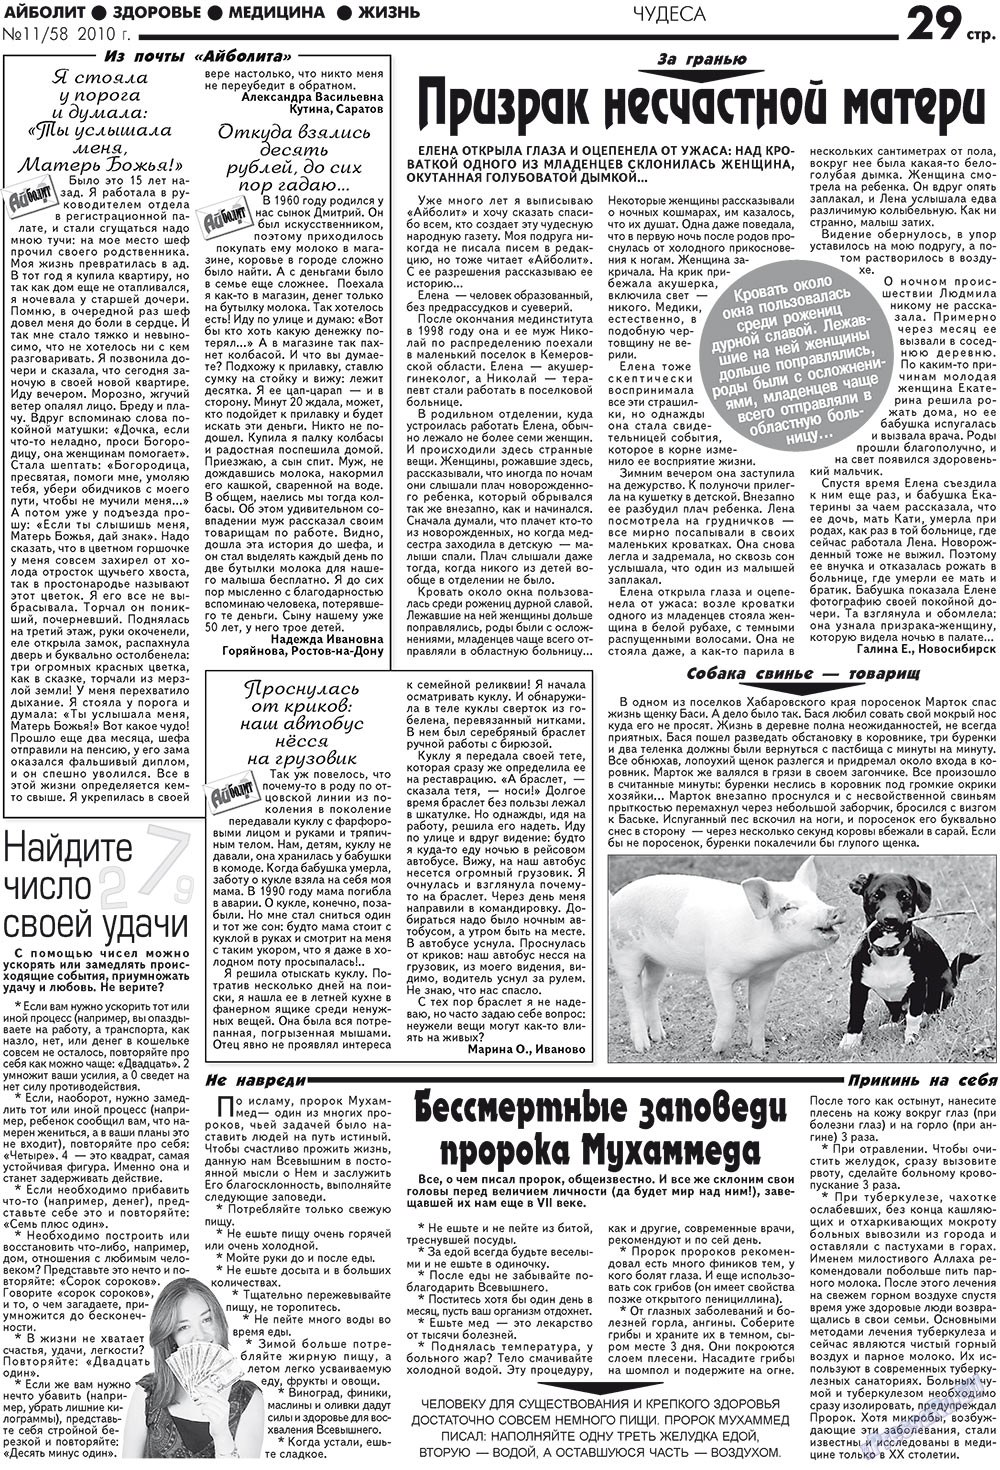 АйБолит (газета). 2010 год, номер 11, стр. 29